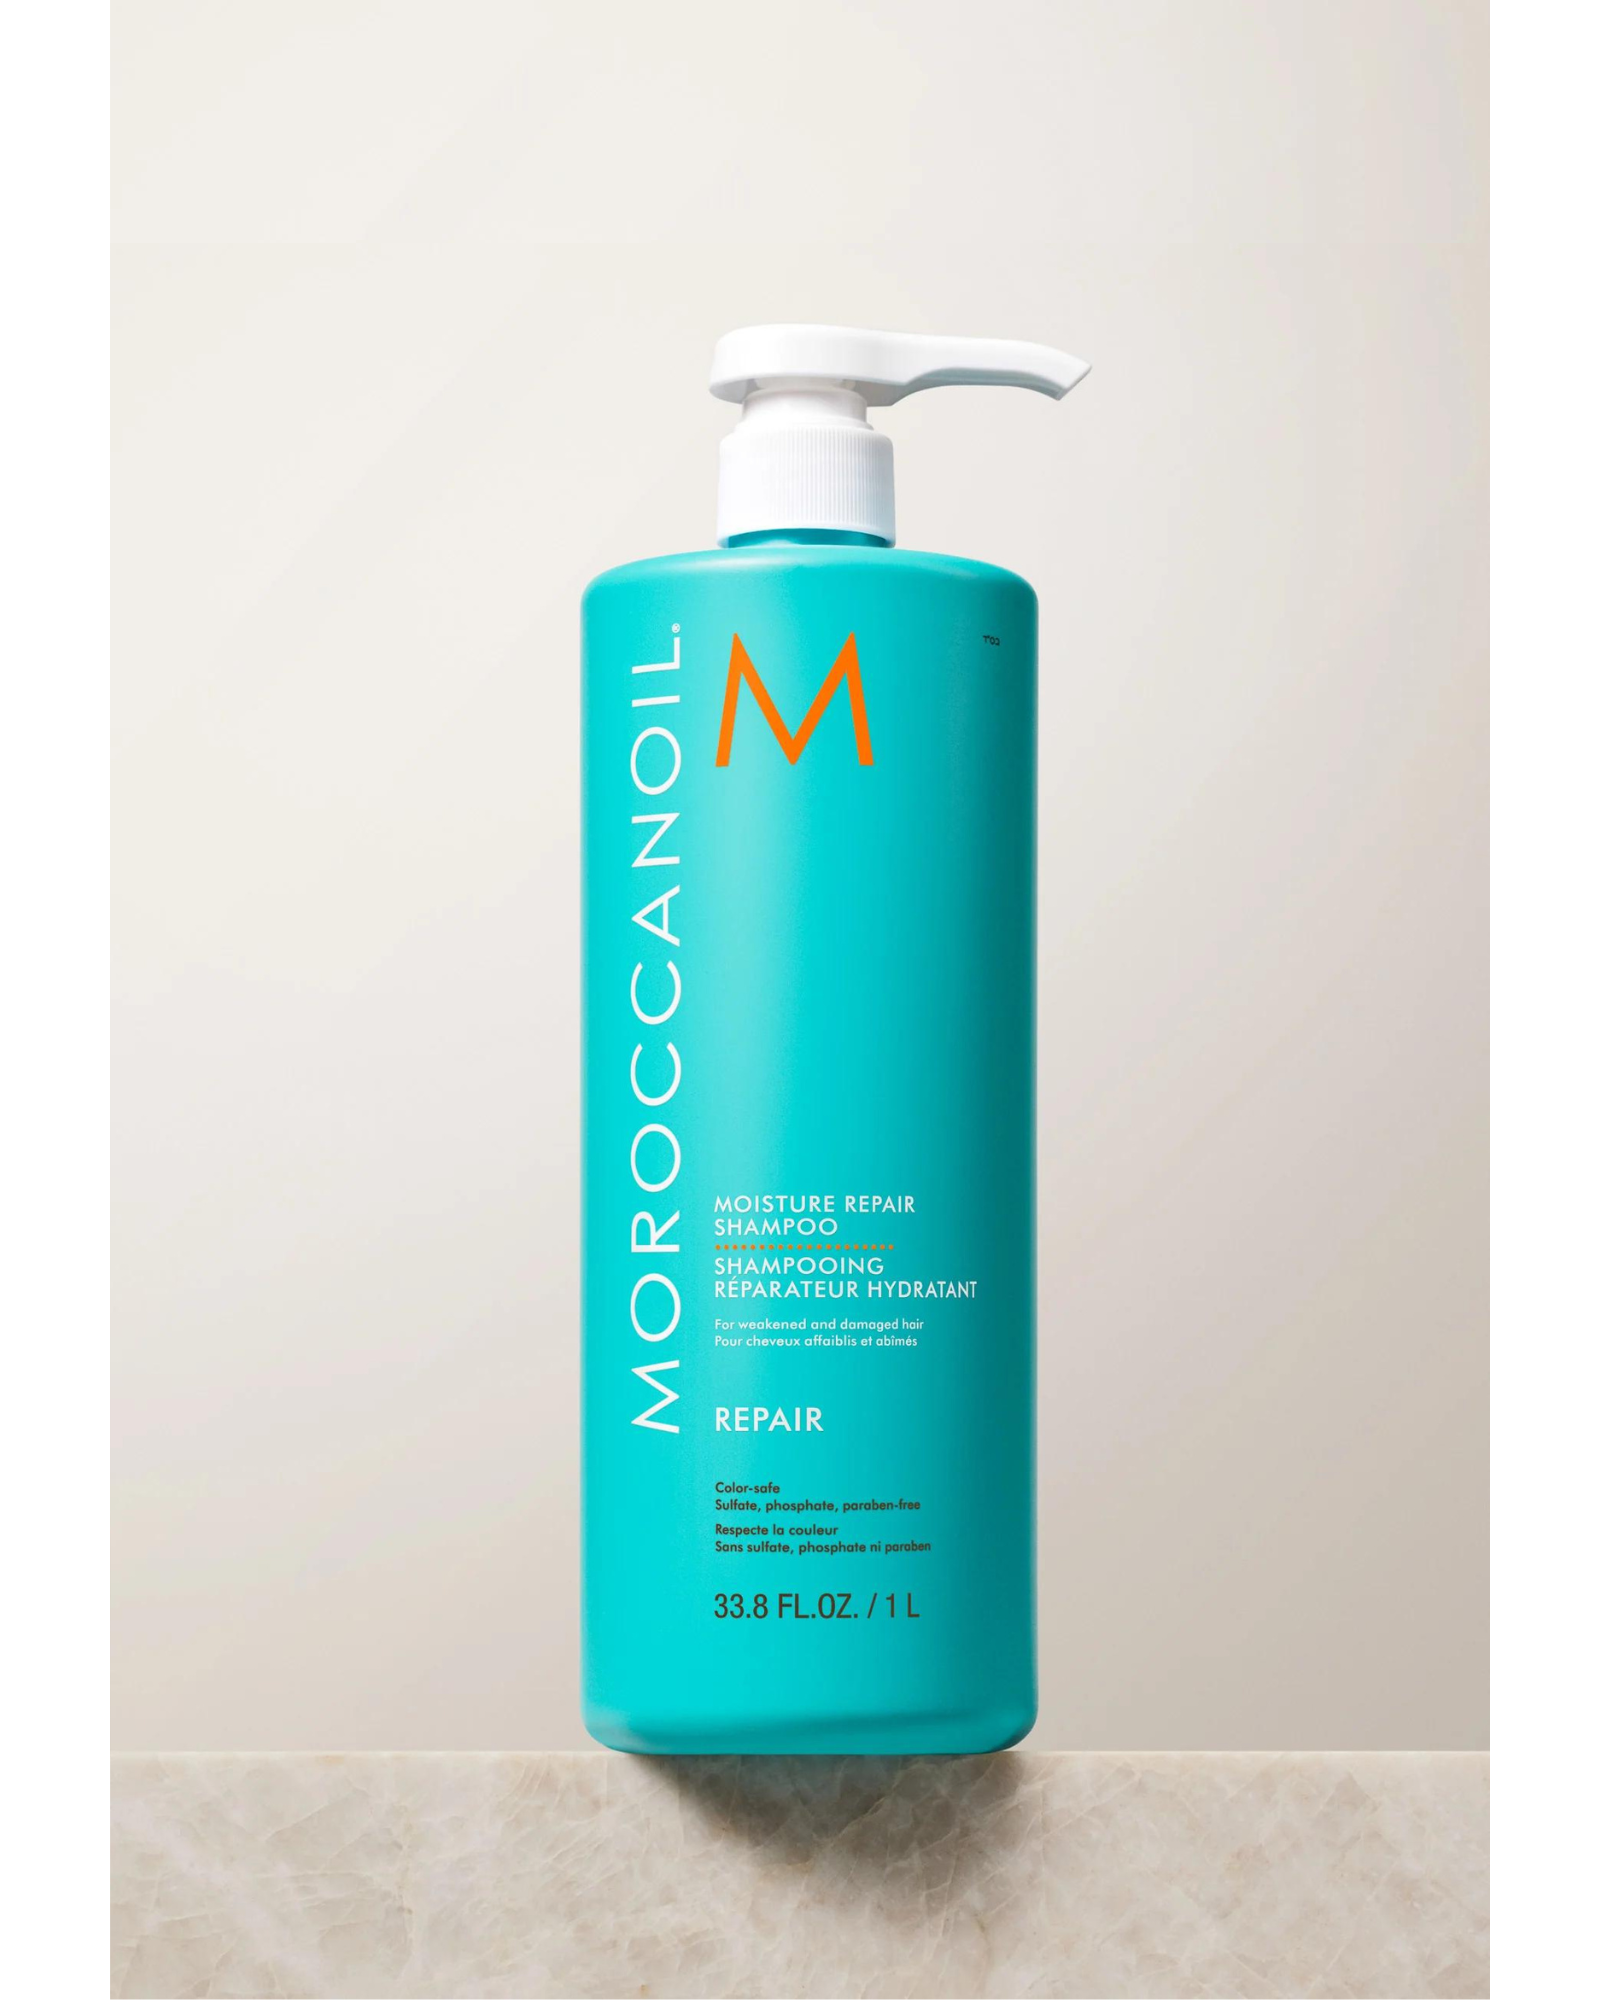 Fortifying shampoo (MoroccanOil Moisture Repair Shampoo)